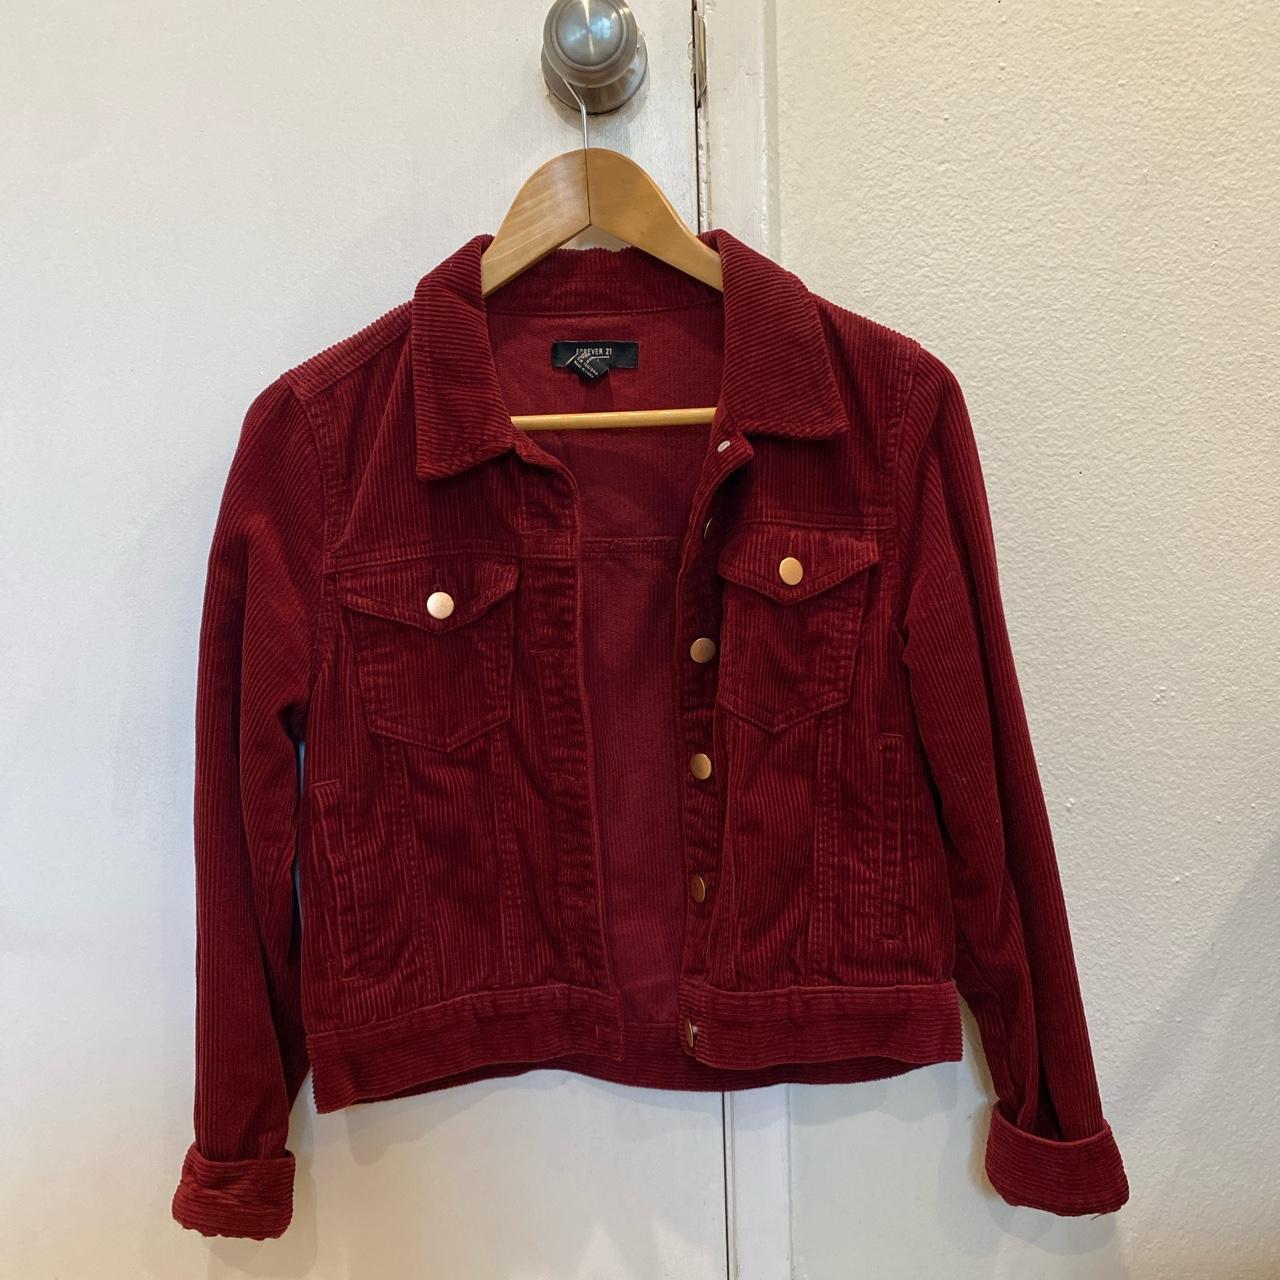 deeper red velvet corduroy jacket size small - Depop